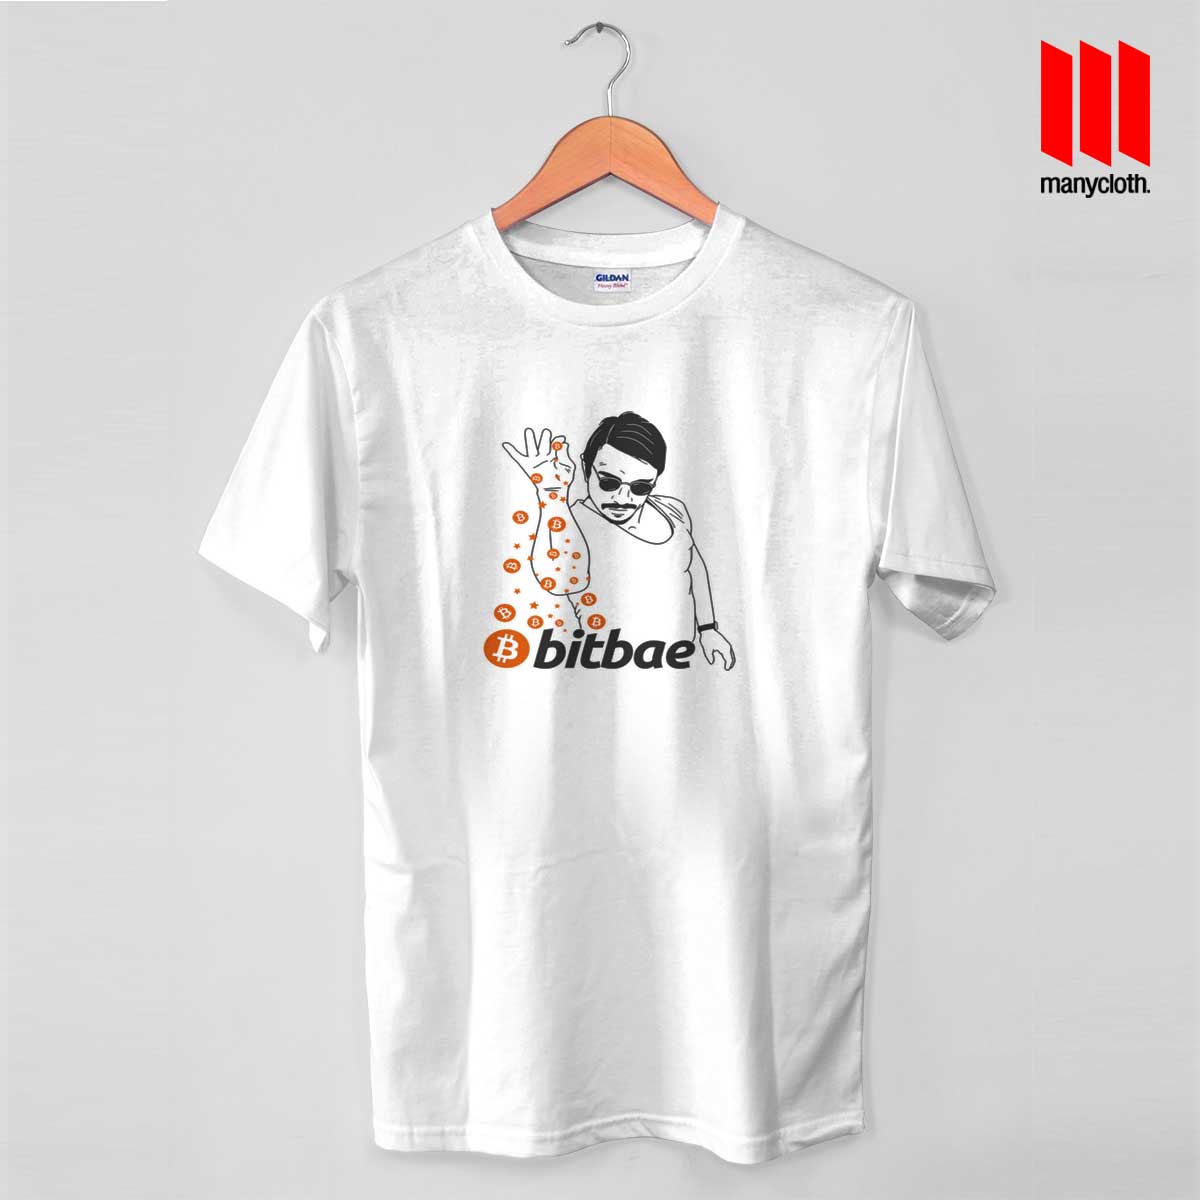 Bit Bae Shit T Shirt - by ManyCloth chep designs.com